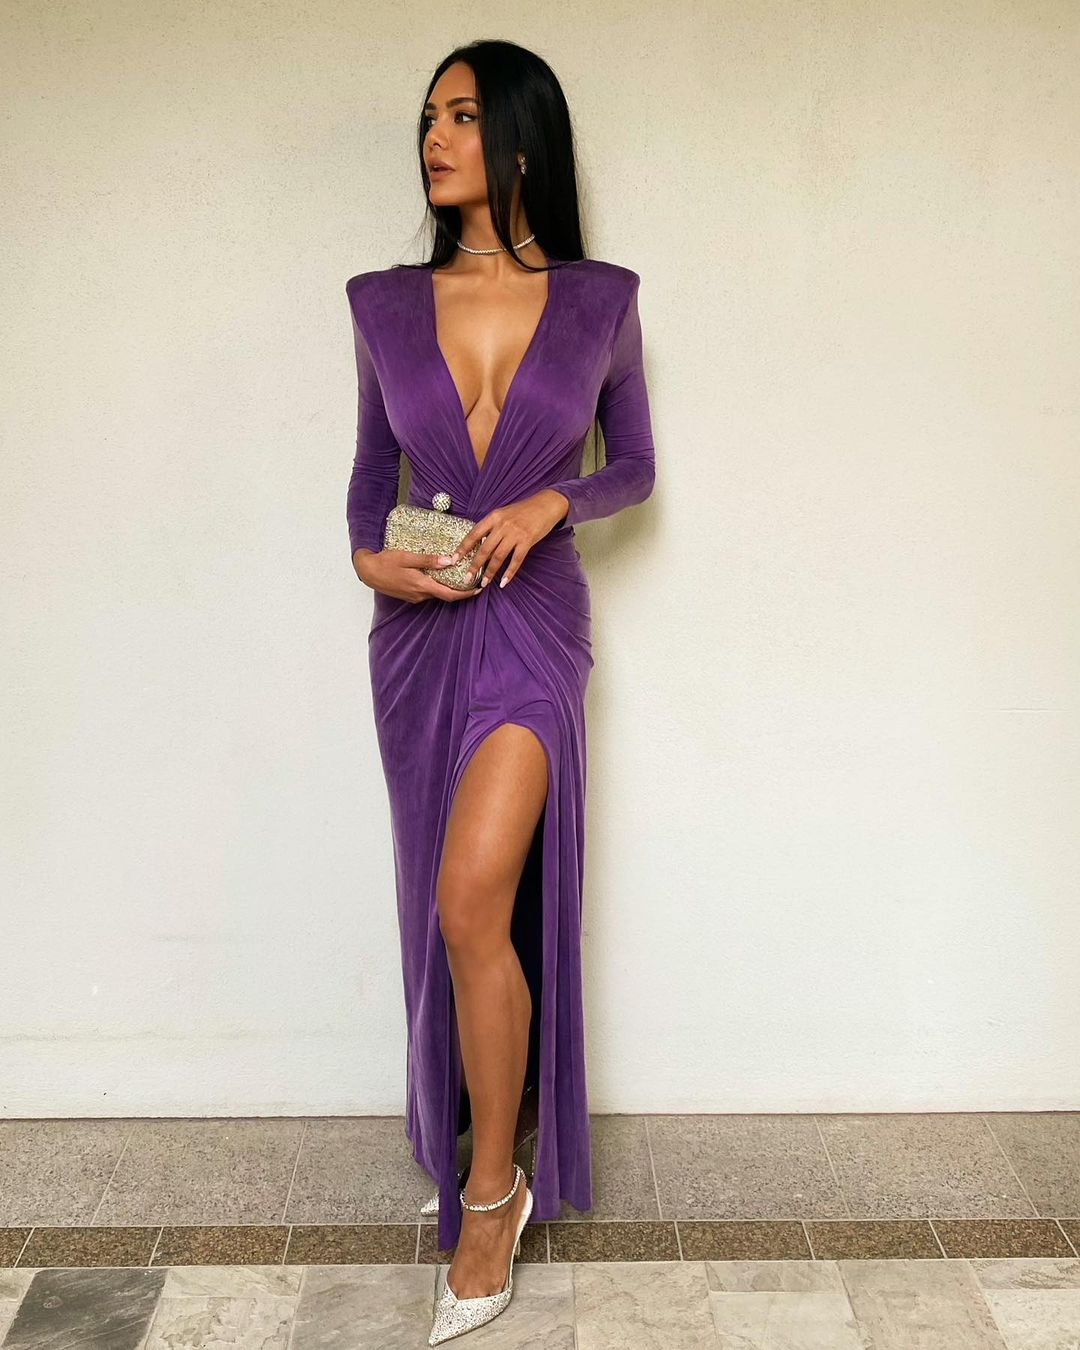 Esha Gupta's Fabulous Look In Velvet Purple Side SLit Gown